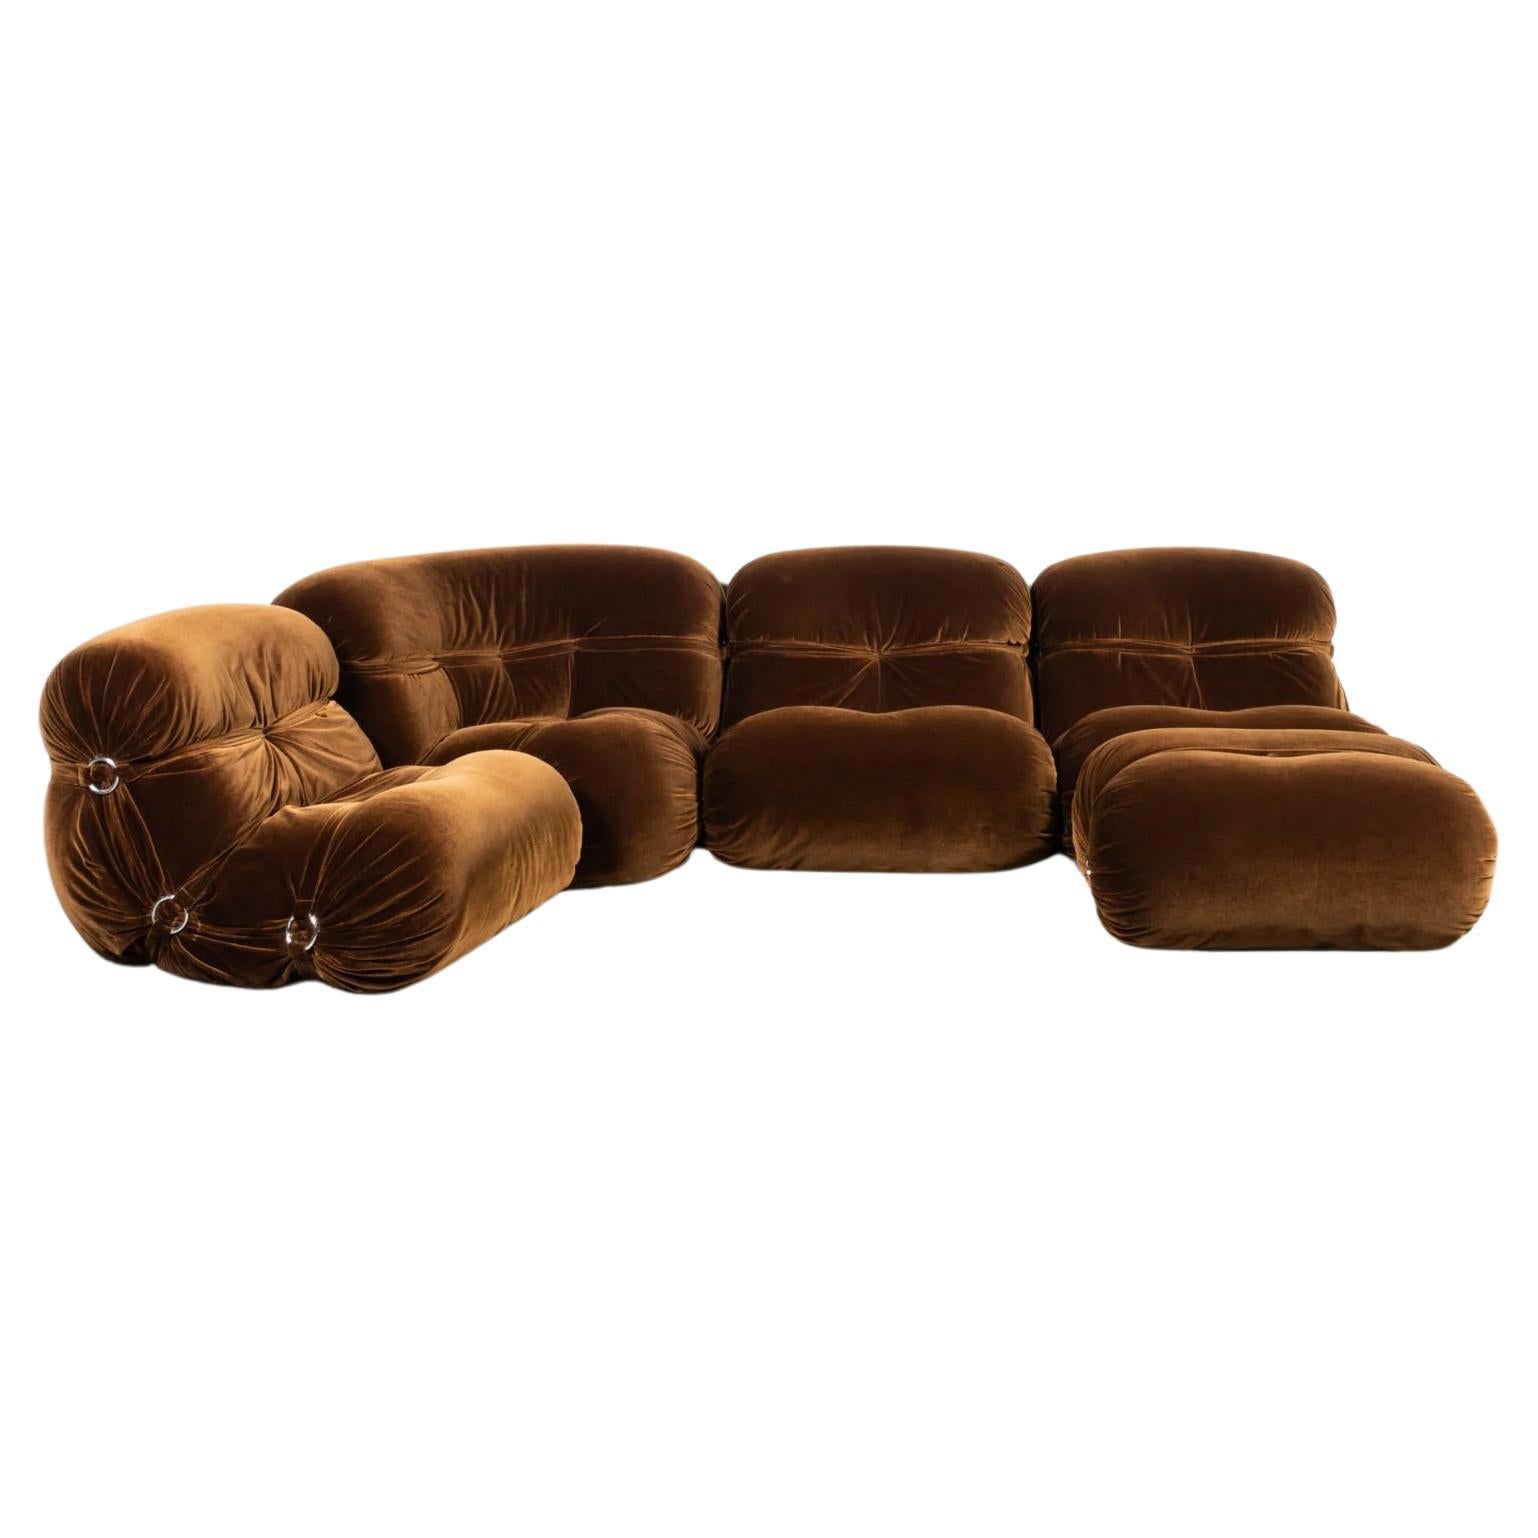 1970s 5 piece Modular Sofa in Original Chocolate Brown Velvet